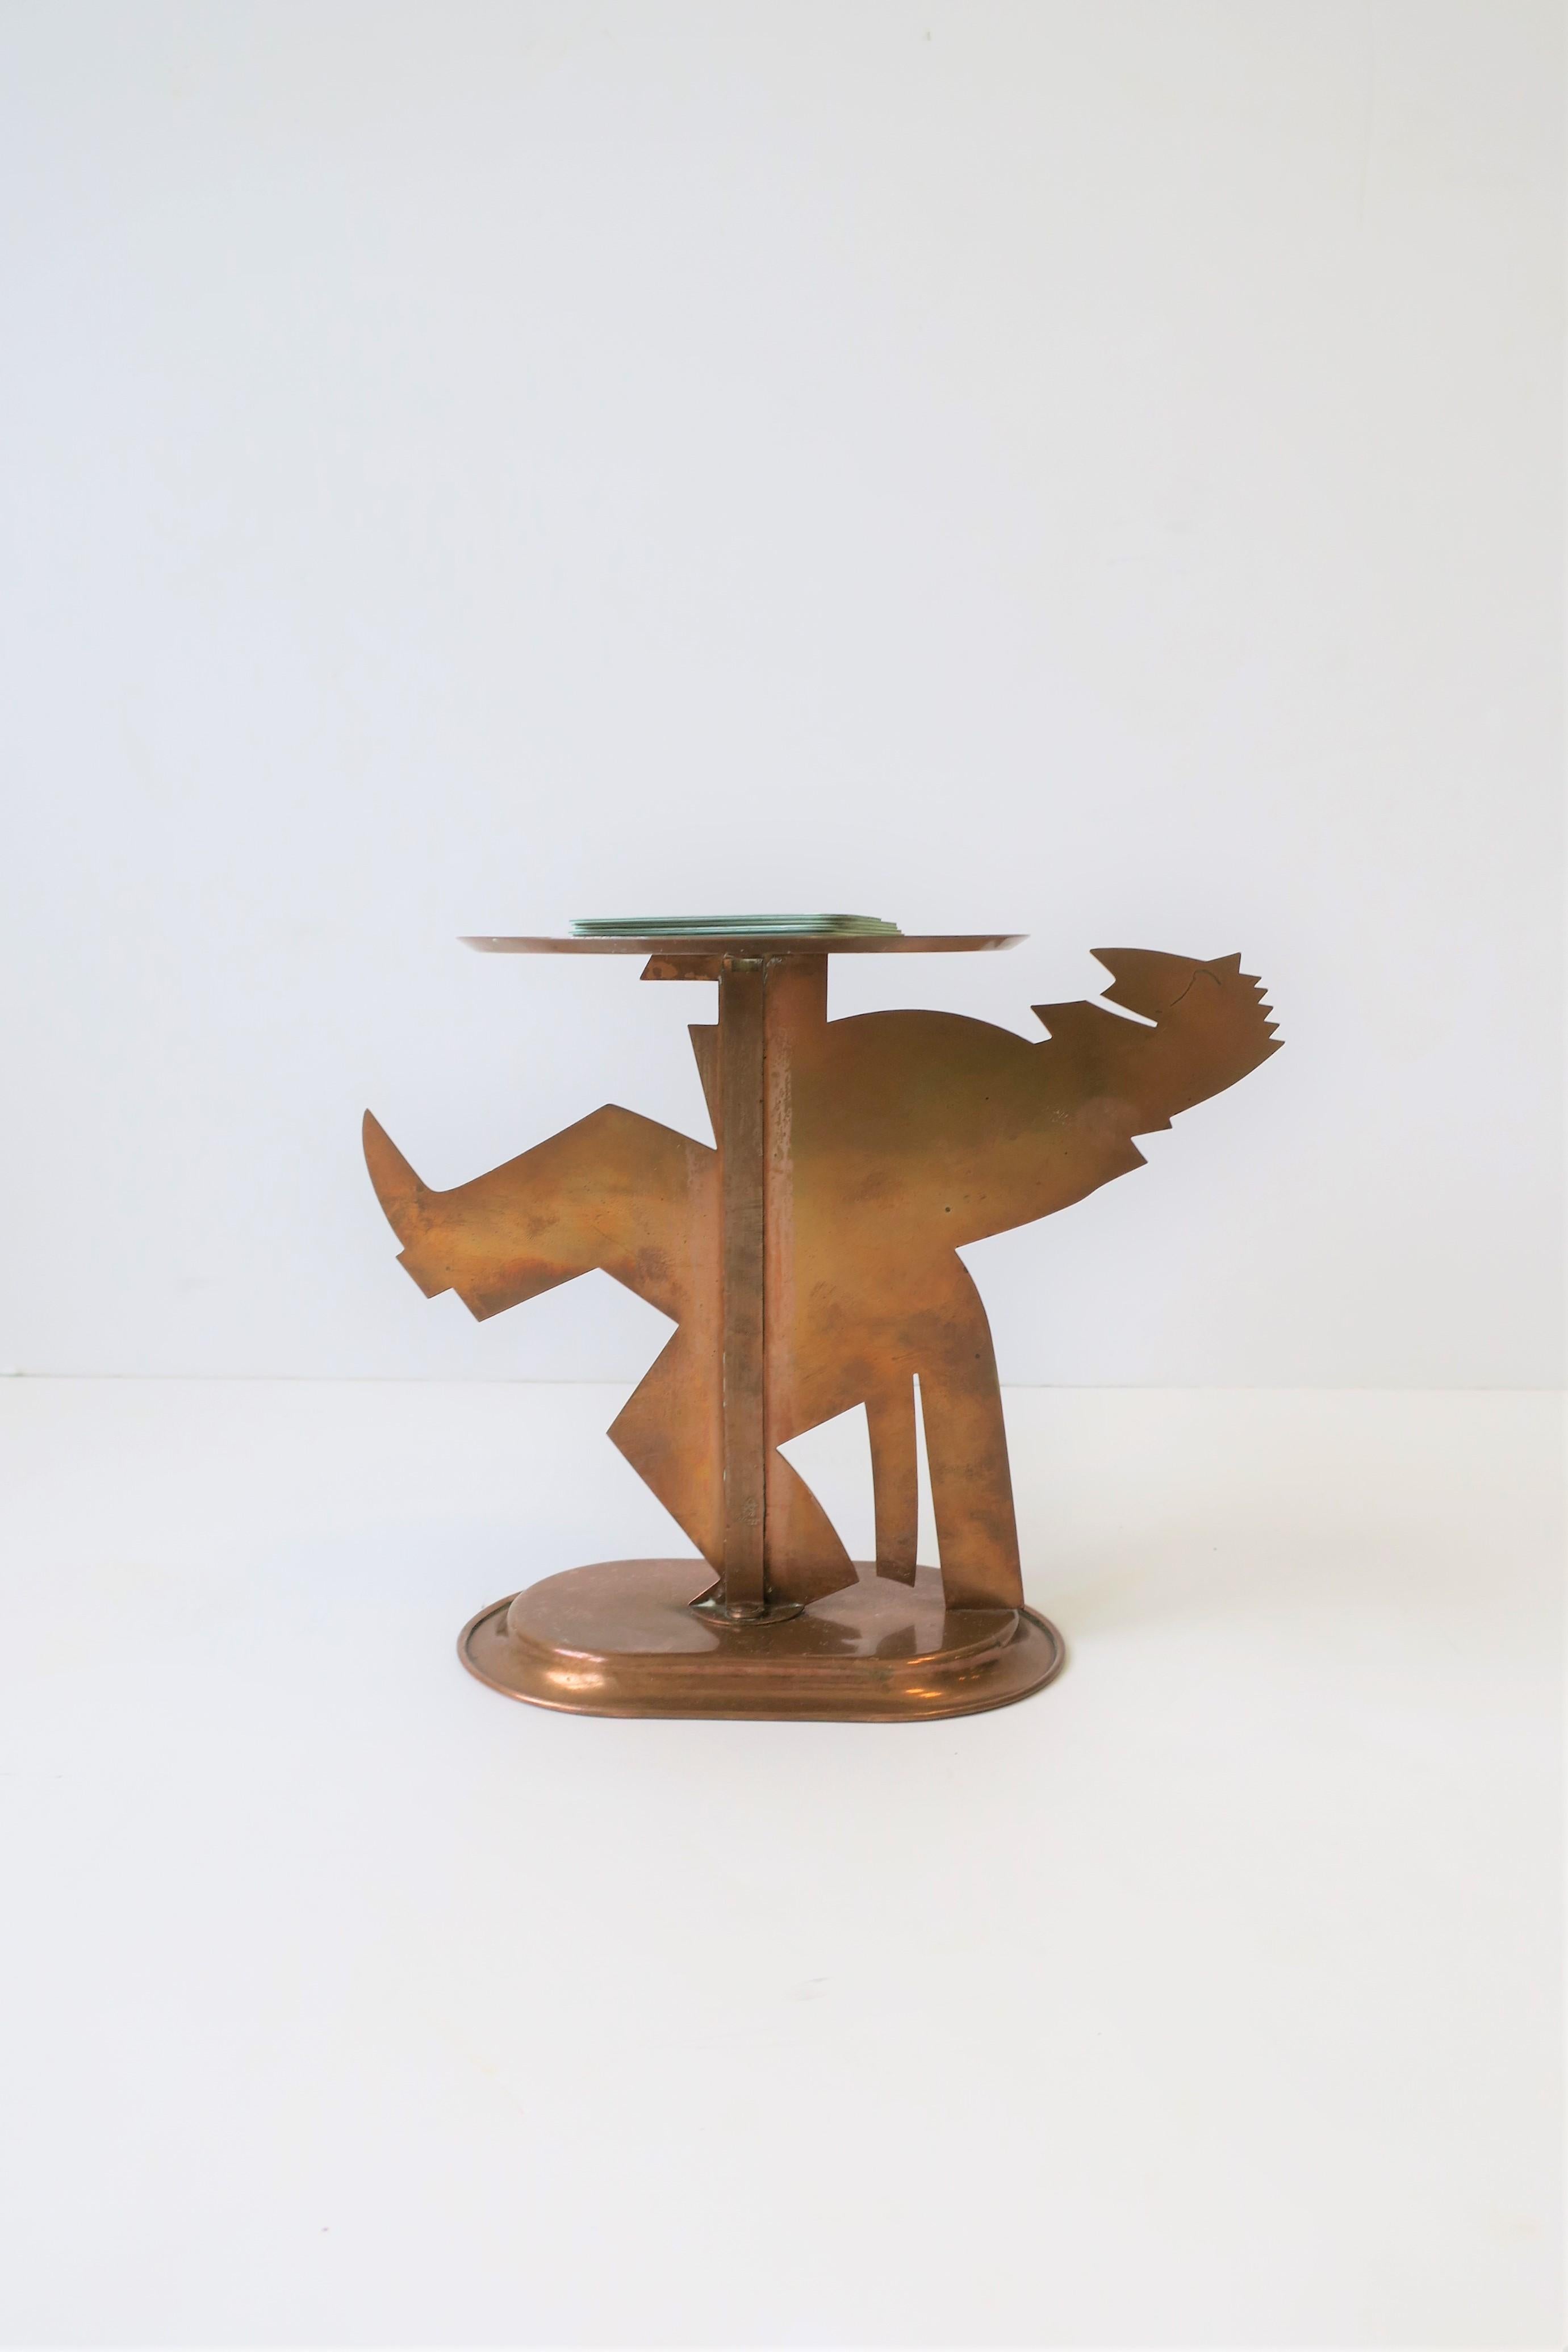 Art Deco Period Copper Figurative Sculpture Piece by Chase For Sale 4